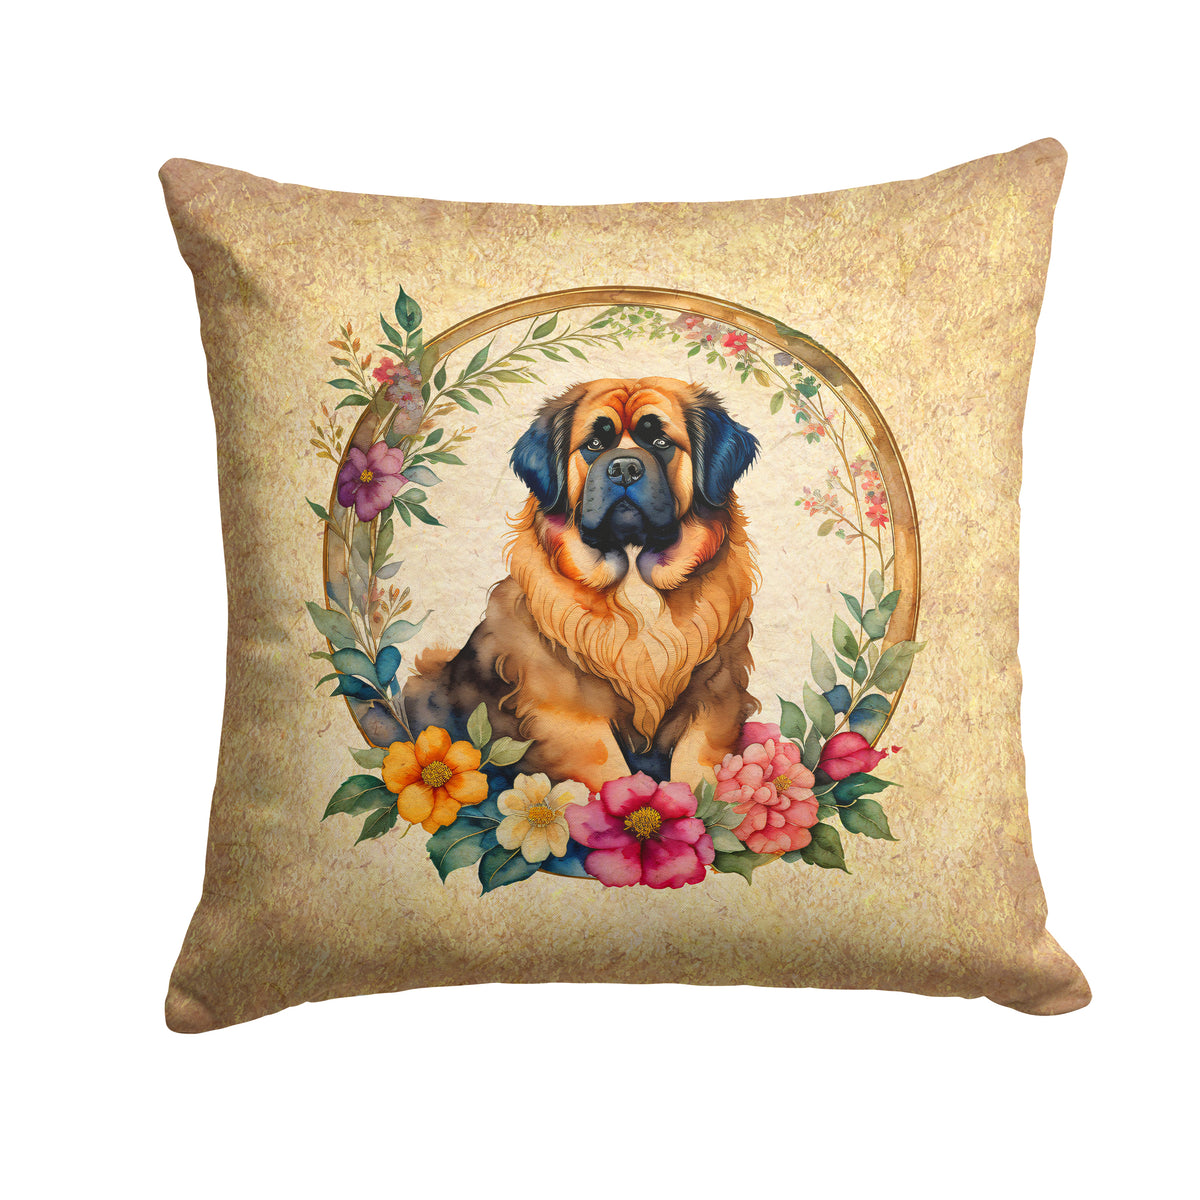 Buy this Tibetan Mastiff and Flowers Fabric Decorative Pillow